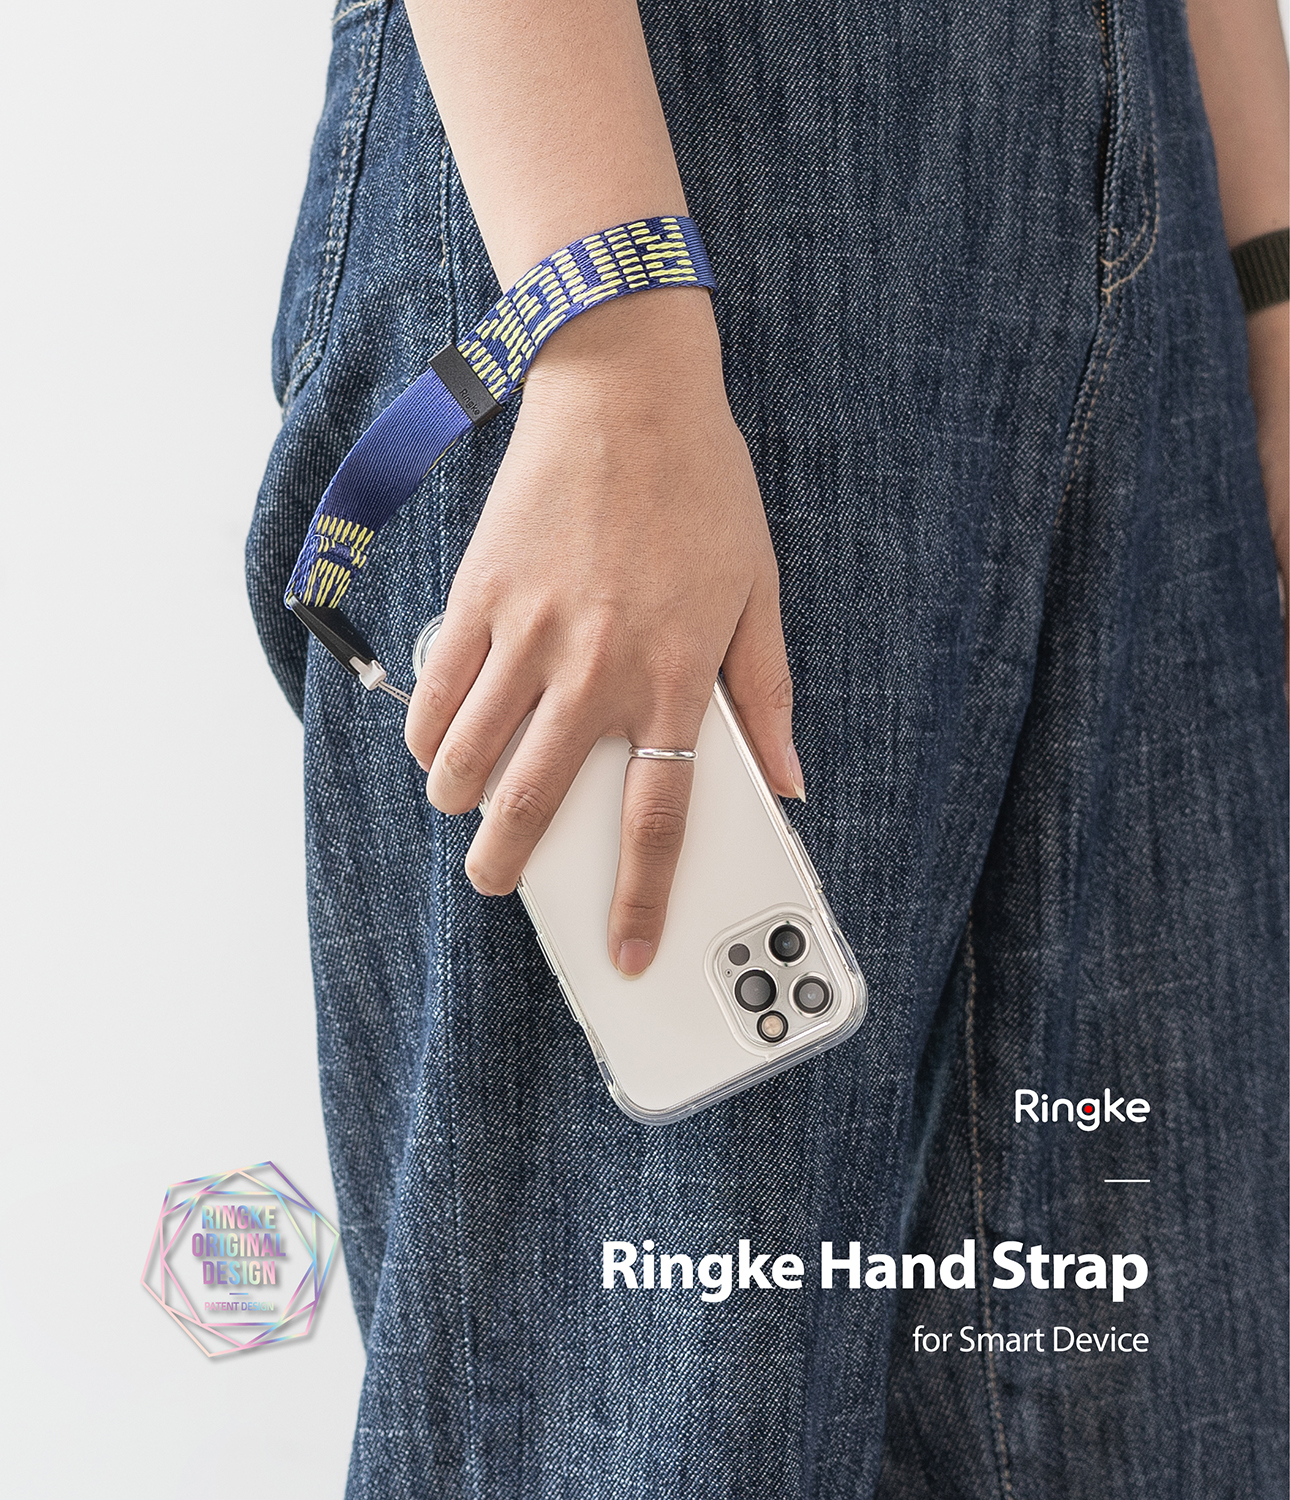 Ringke_Hand_Strap_LB_sub